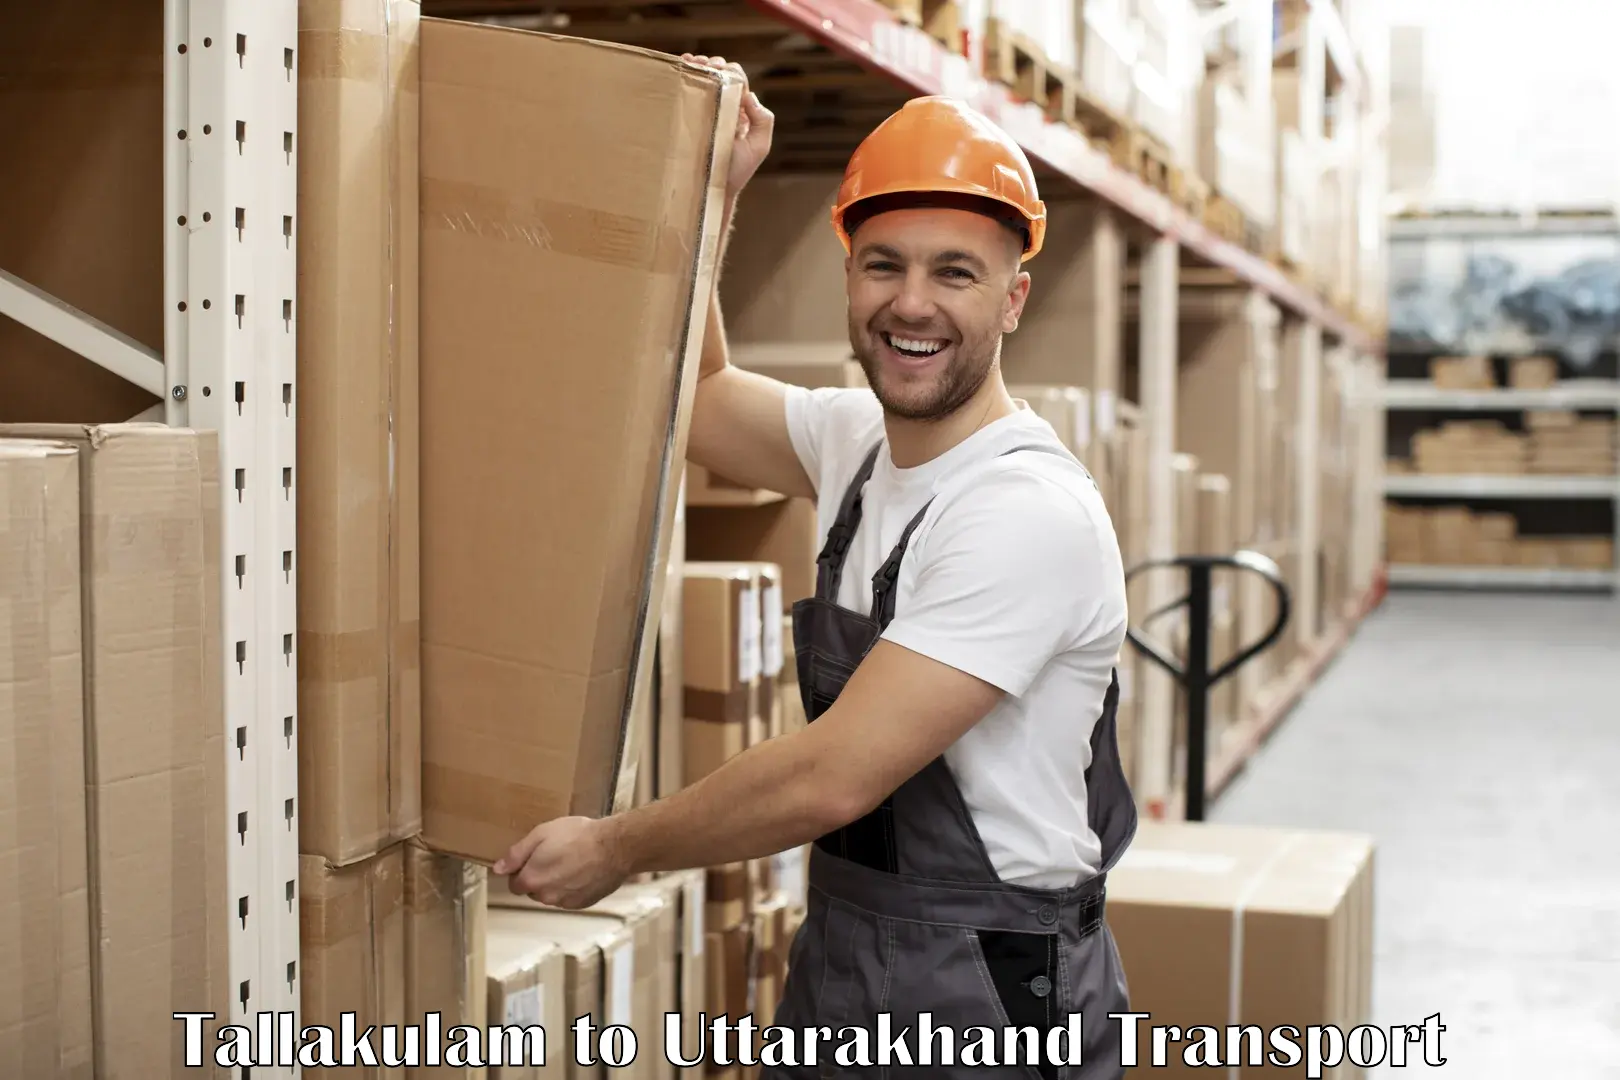 Truck transport companies in India Tallakulam to Haridwar